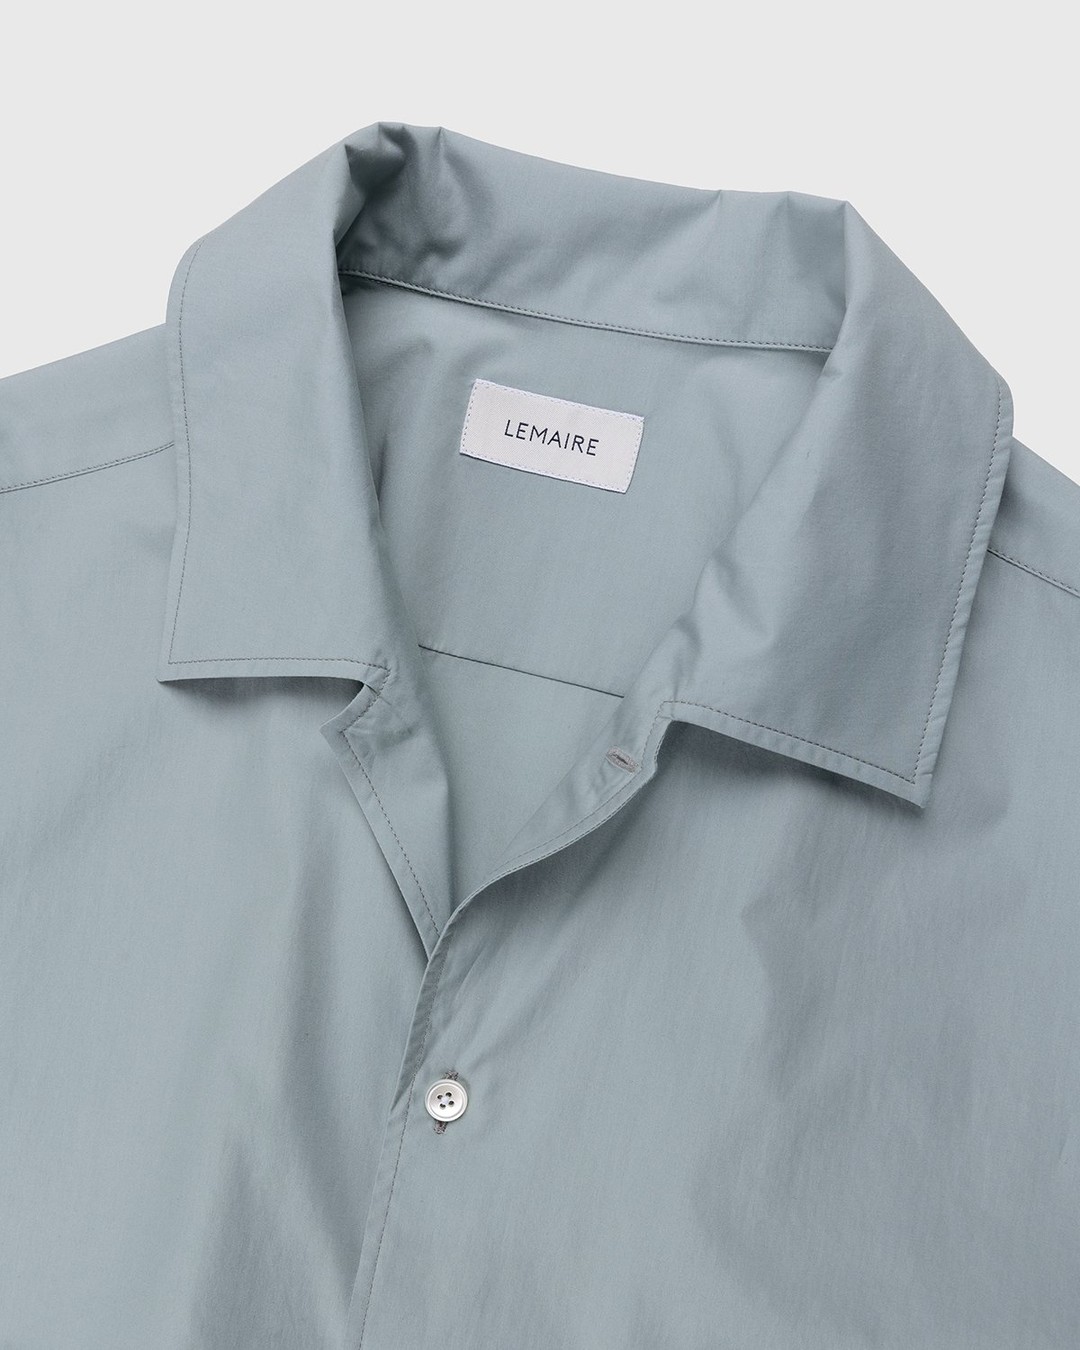 Lemaire – Convertible Collar Long Sleeve Shirt Light Blue - Longsleeve Shirts - White - Image 4